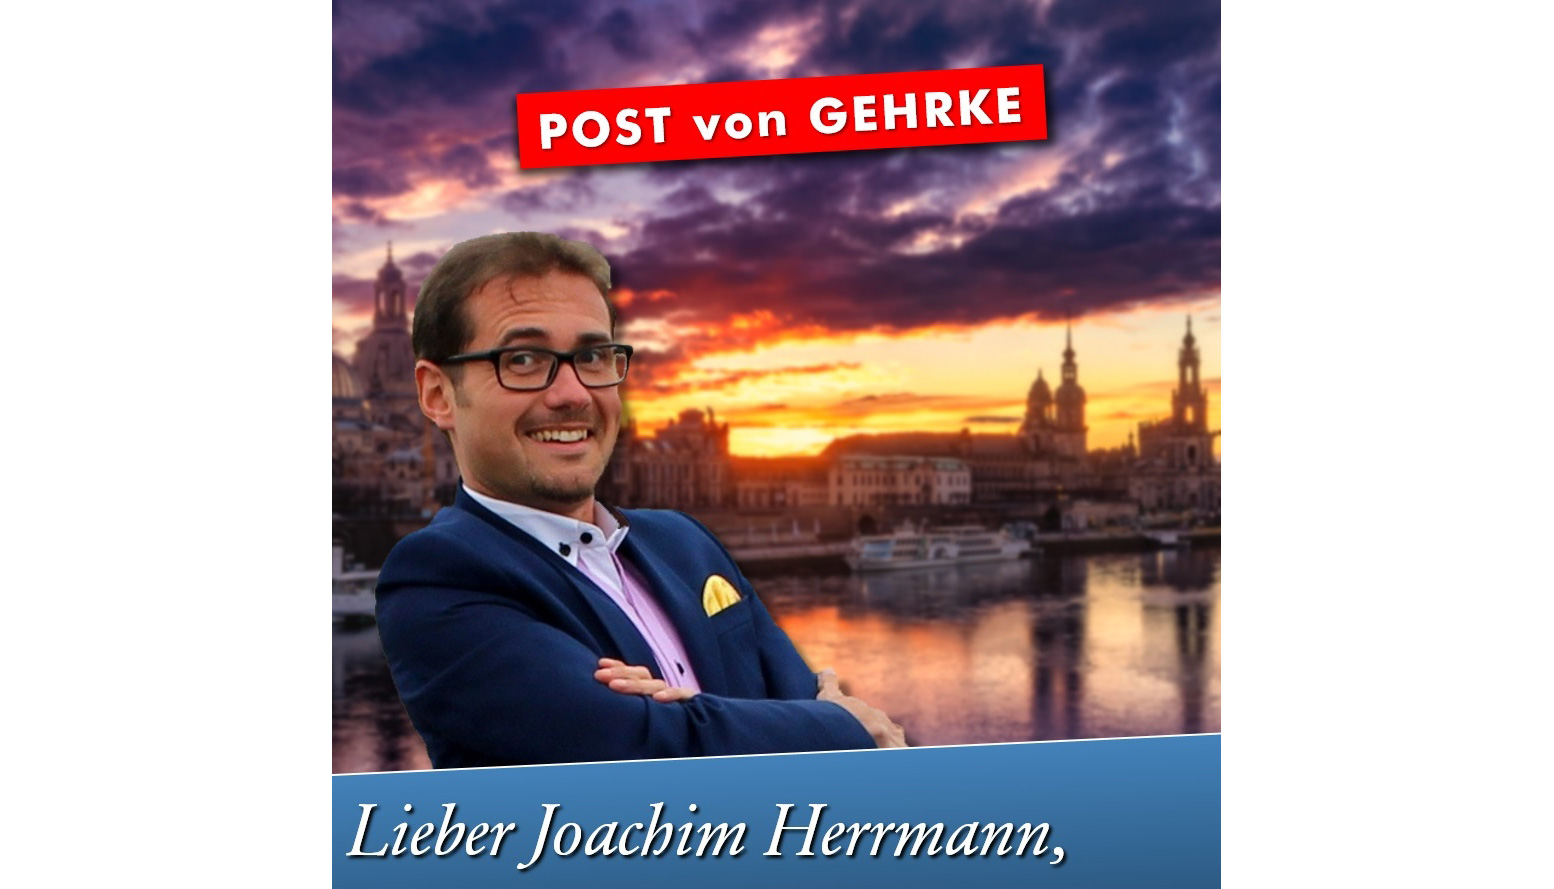 Lieber Joachim Herrmann